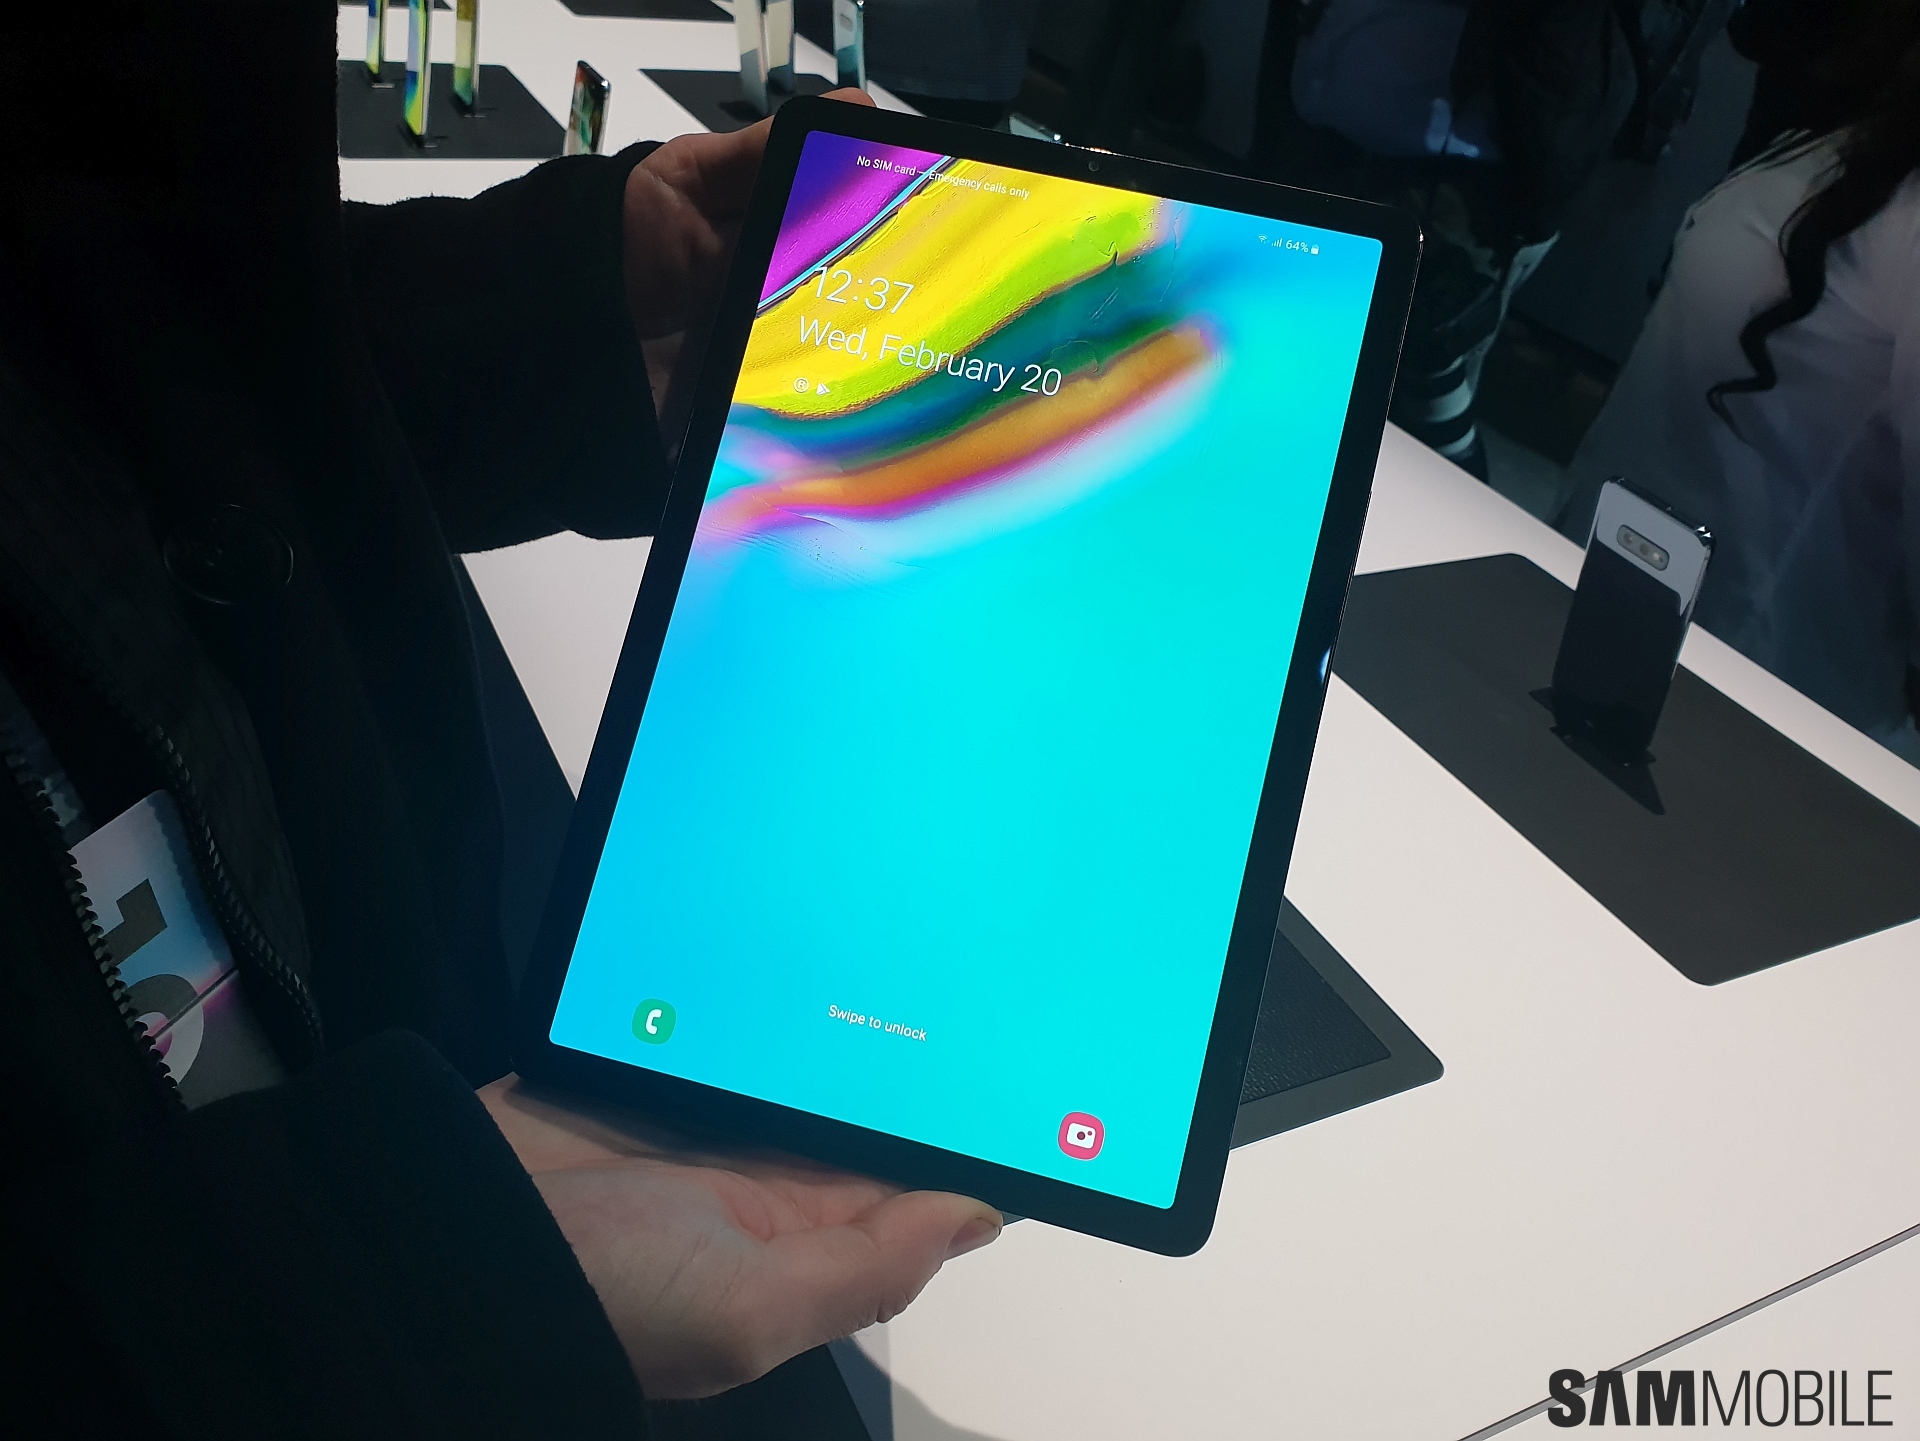 Samsung Galaxy Tab S5e handson: An affordable AMOLED display tablet – UniverSmartphone